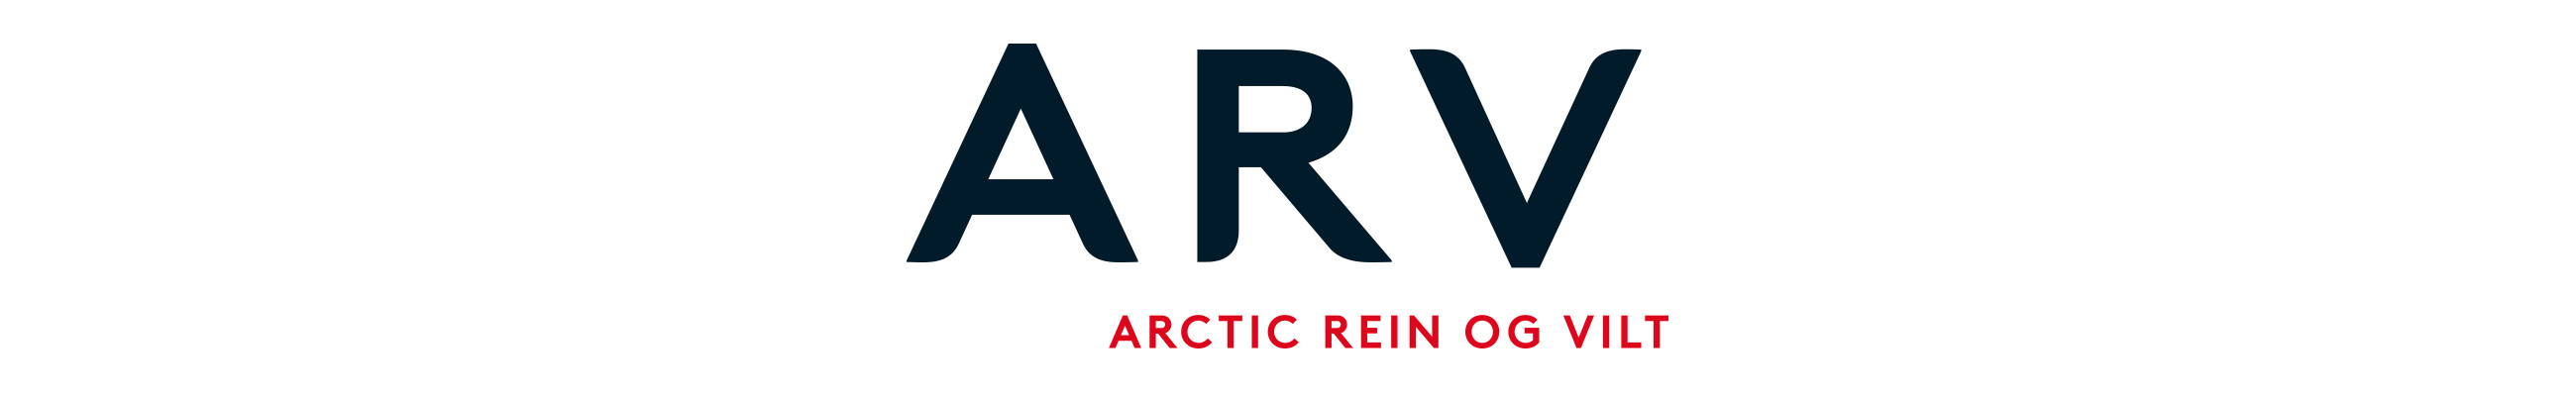 ARV Arctic Rein og vilt logo. Visual identity visuell identitet.